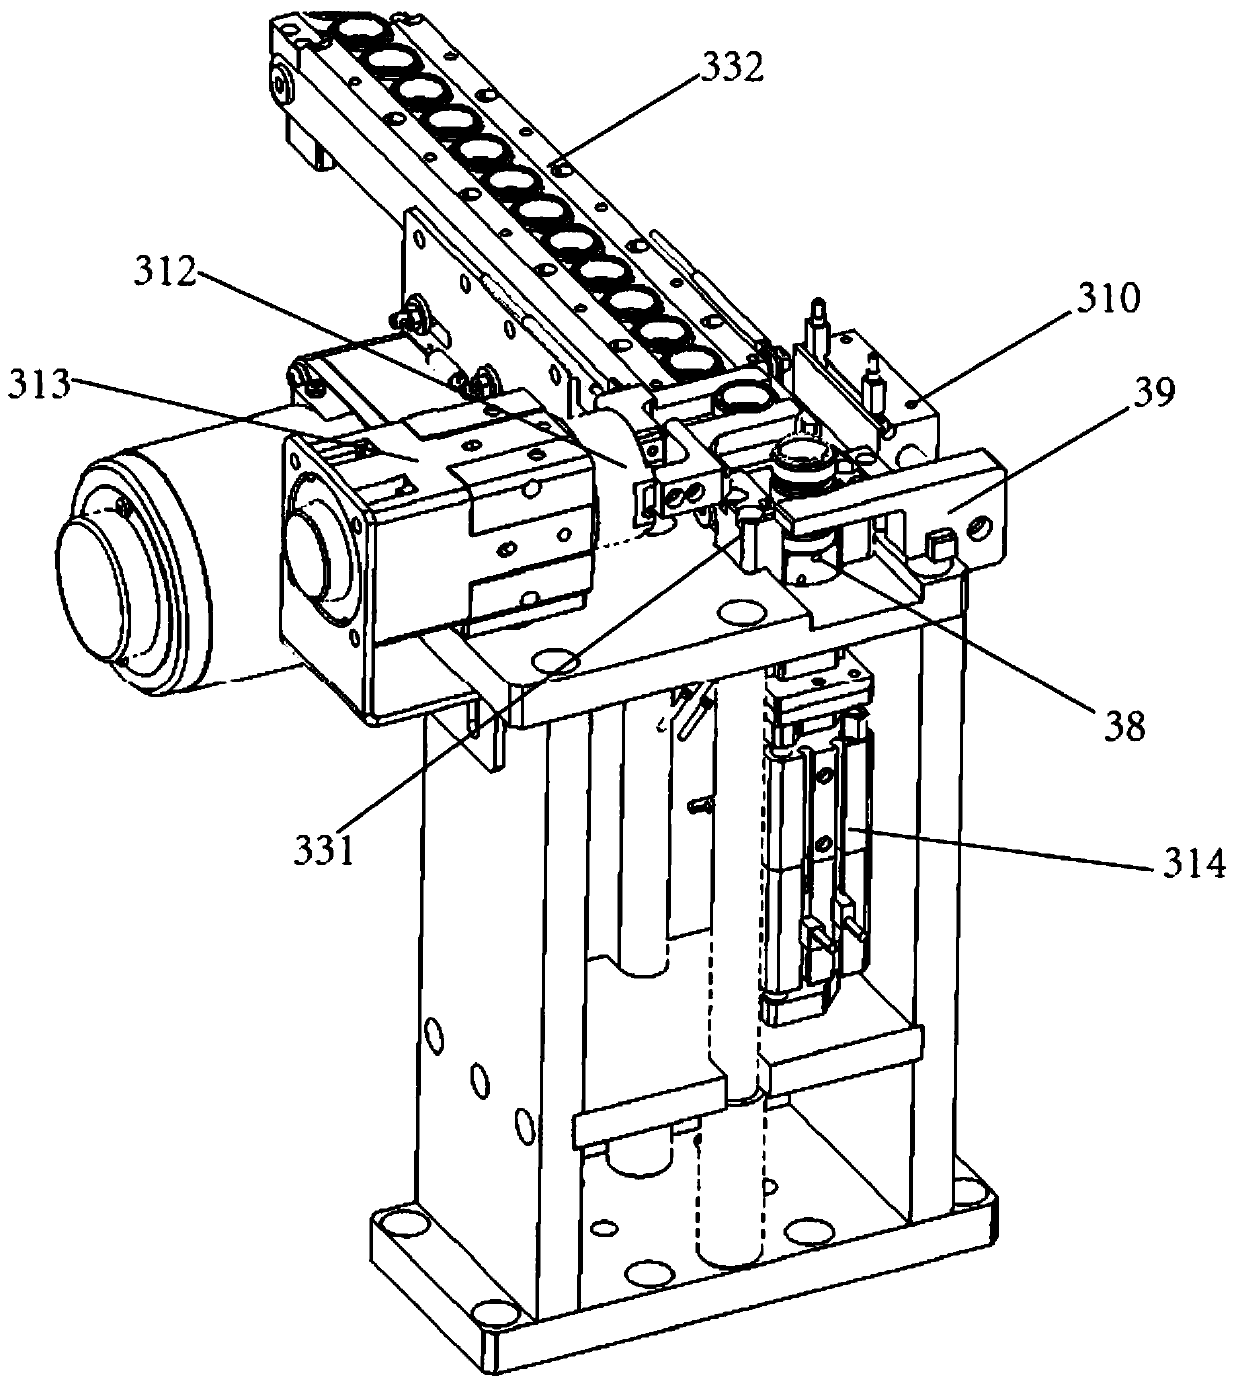 Small-sized bearing press-fitting equipment